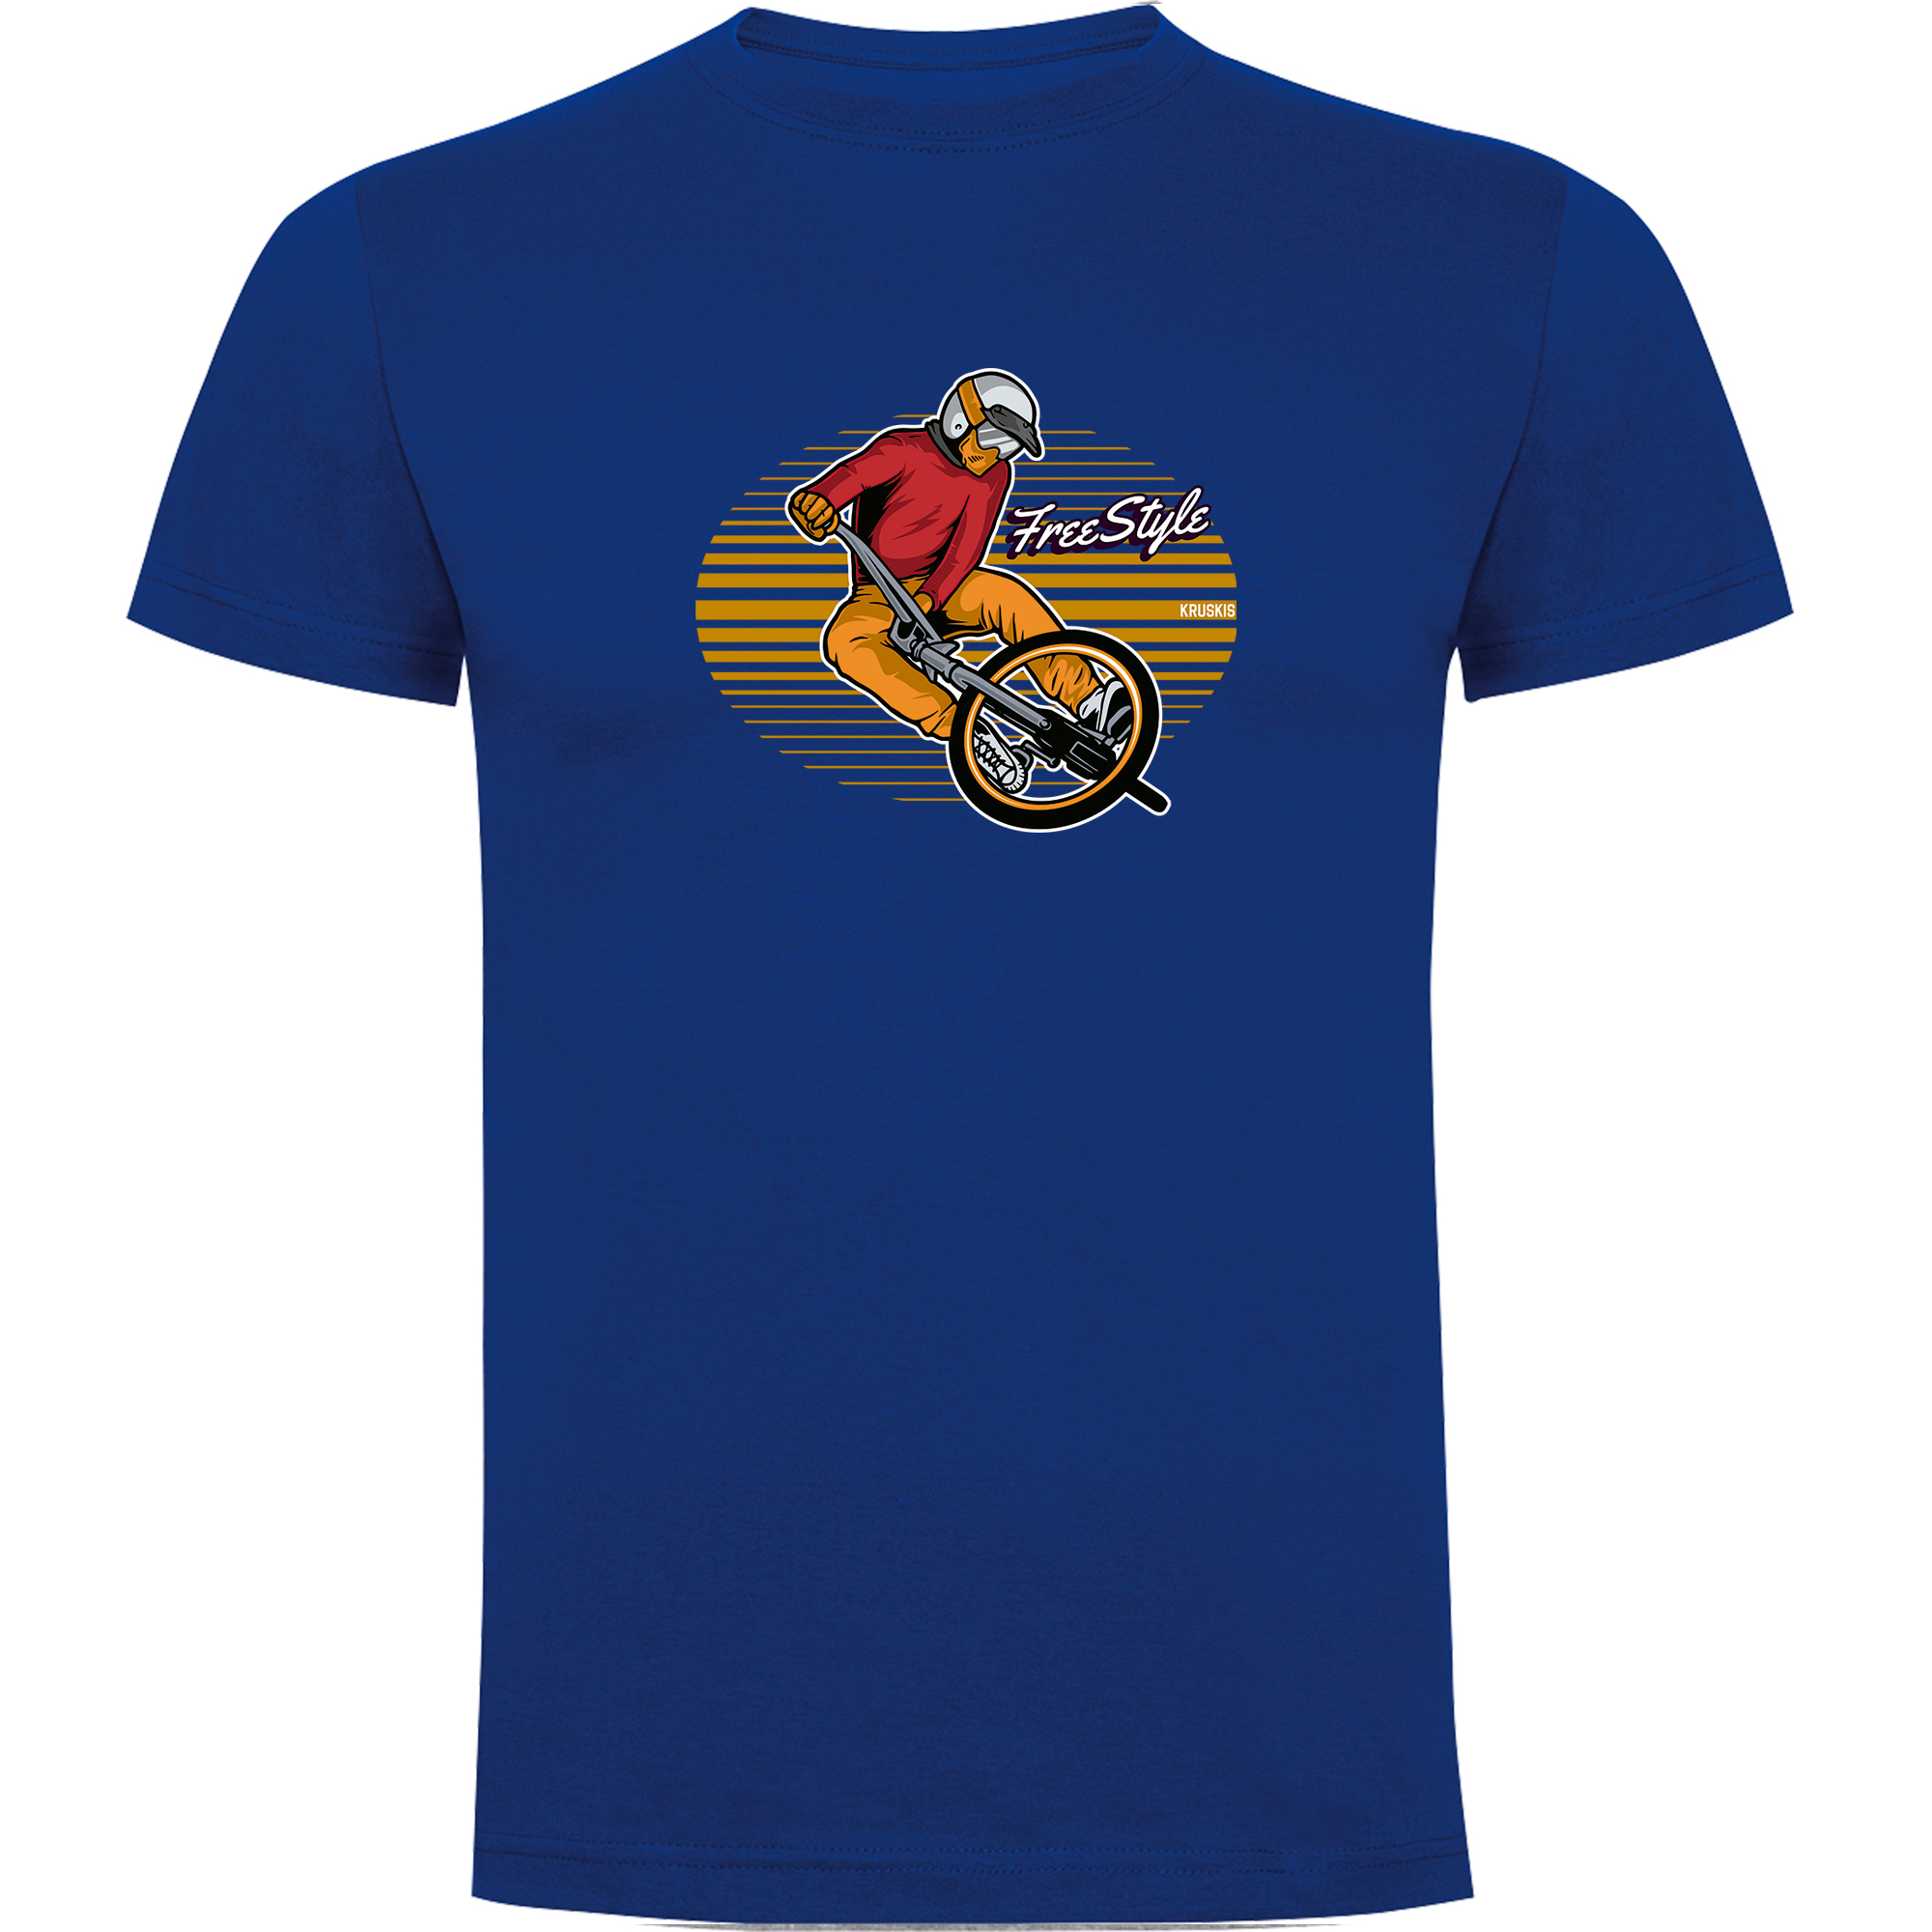 T Shirt BMX Freestyle Rider Kortarmad Man